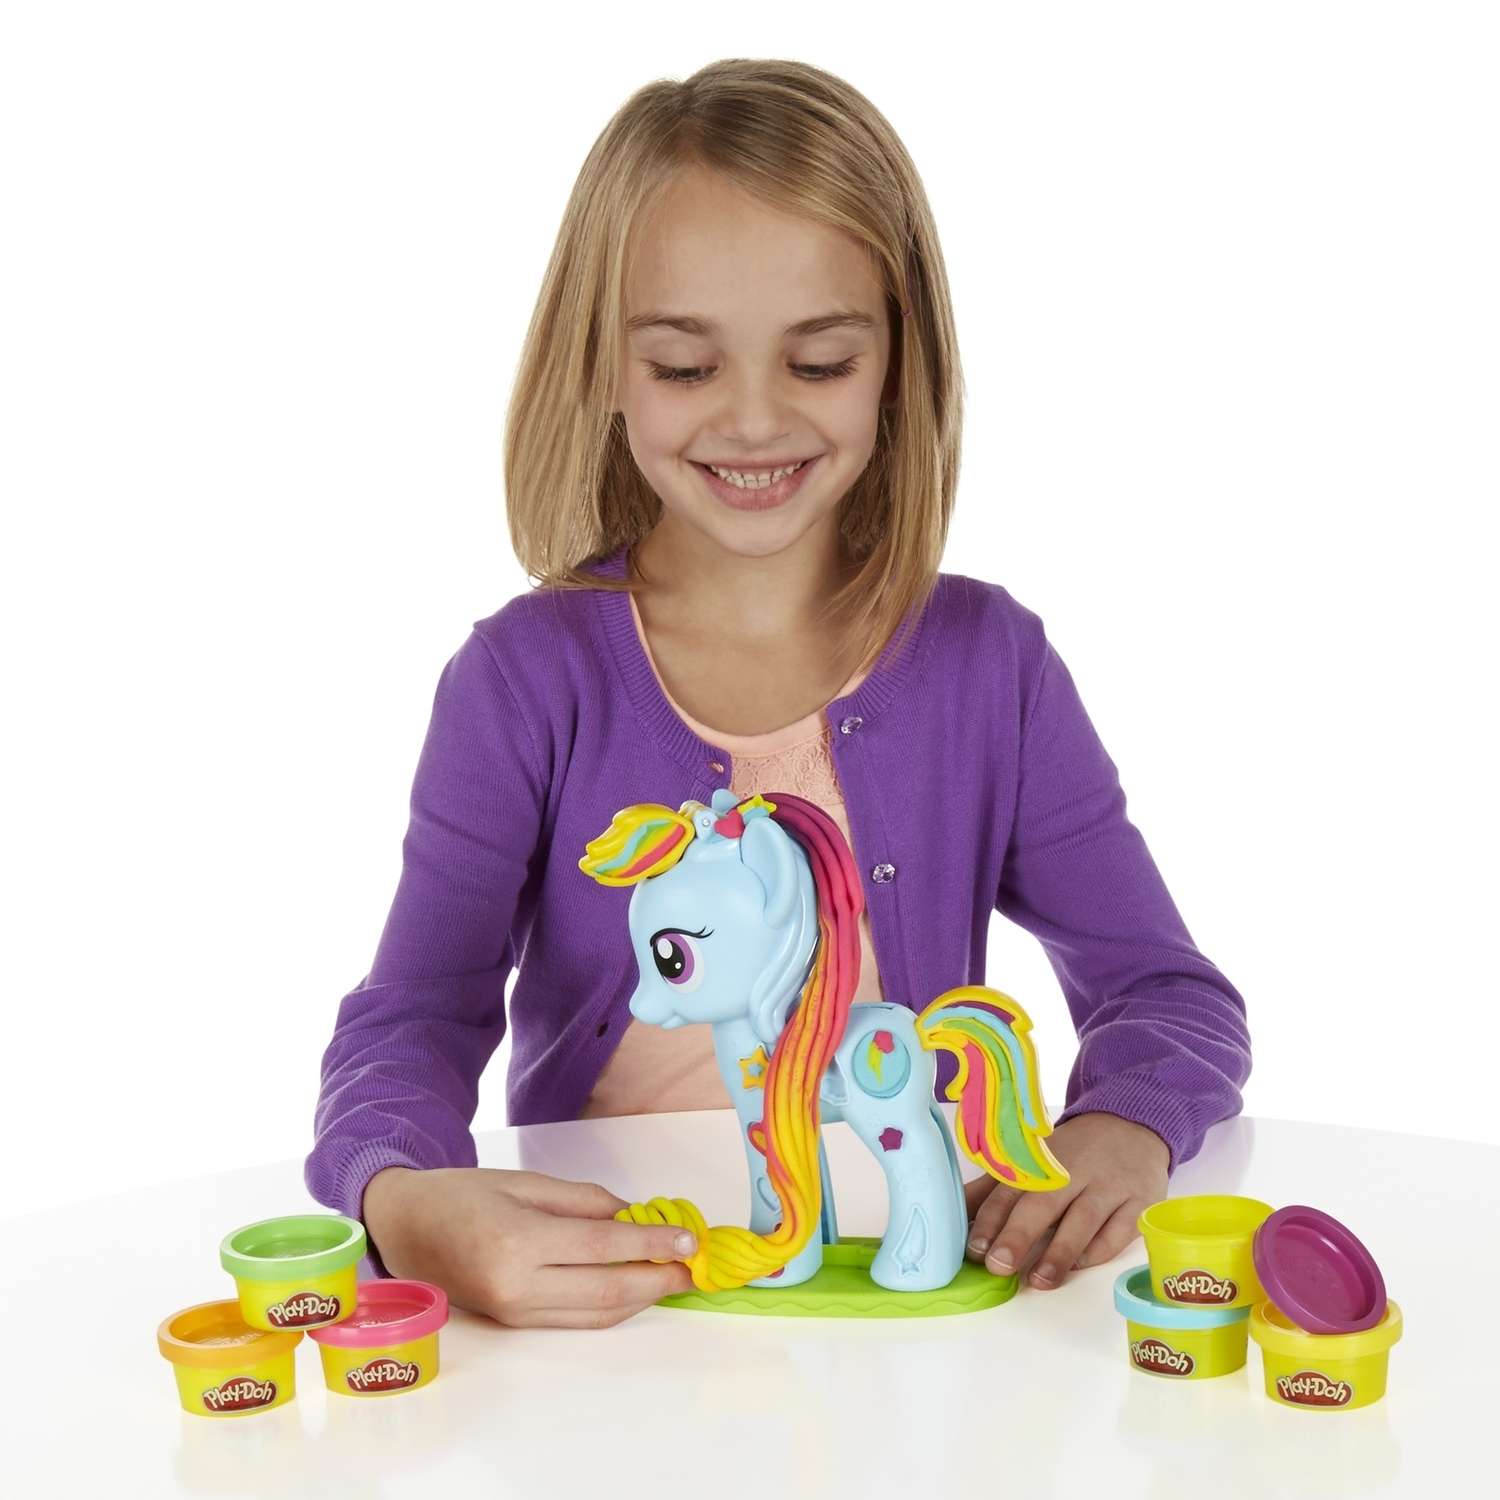 Набор пластилина Play-Doh Стильный салон Рэйнбоу - фото 5